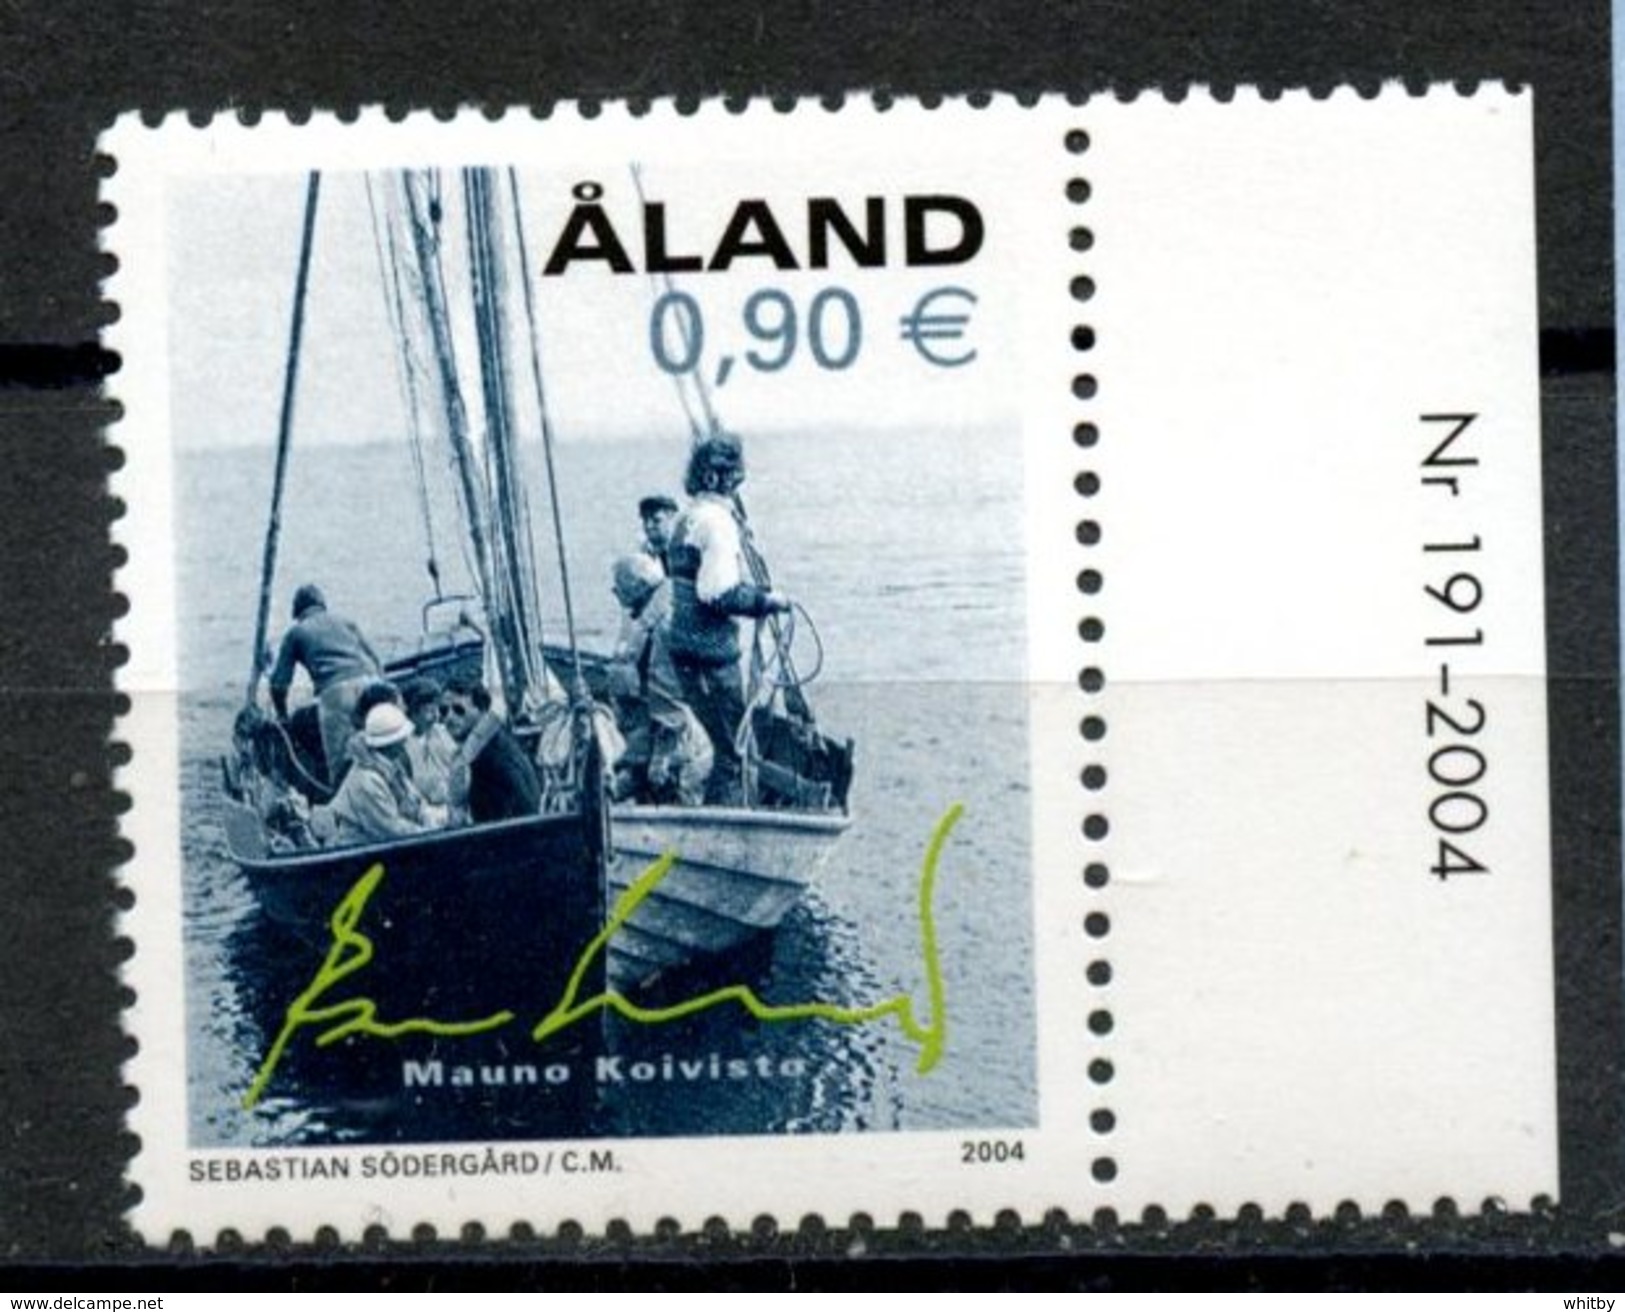 Aland 2004 90c Sailboat Issue #223  MNH - Aland